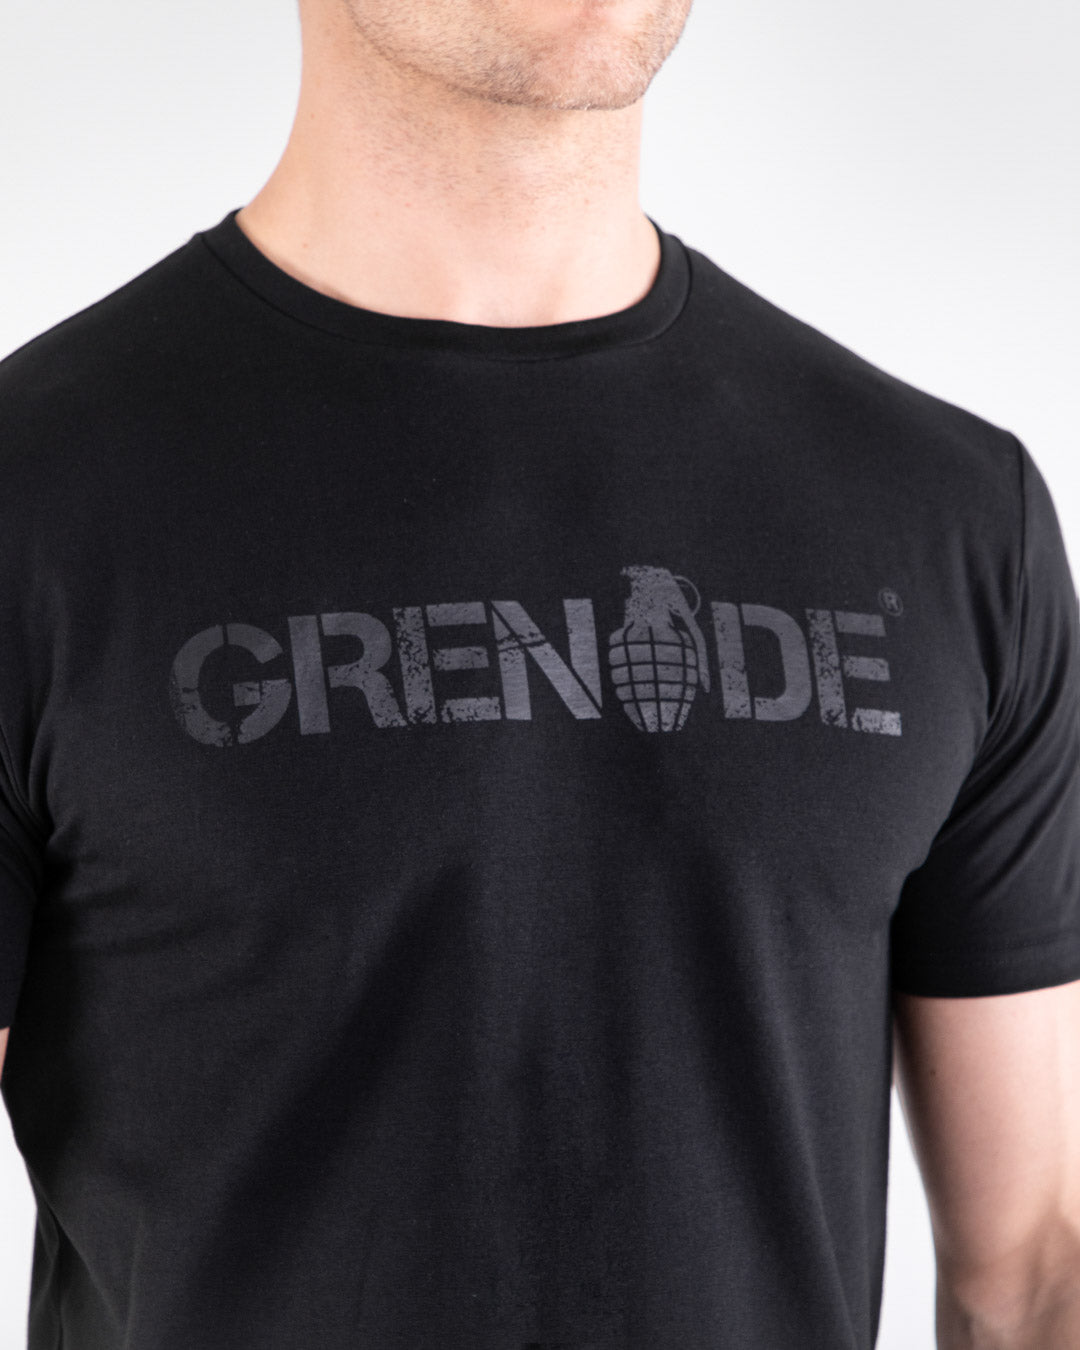 Grenade Mens Core T-Shirt Black on Black Close Up